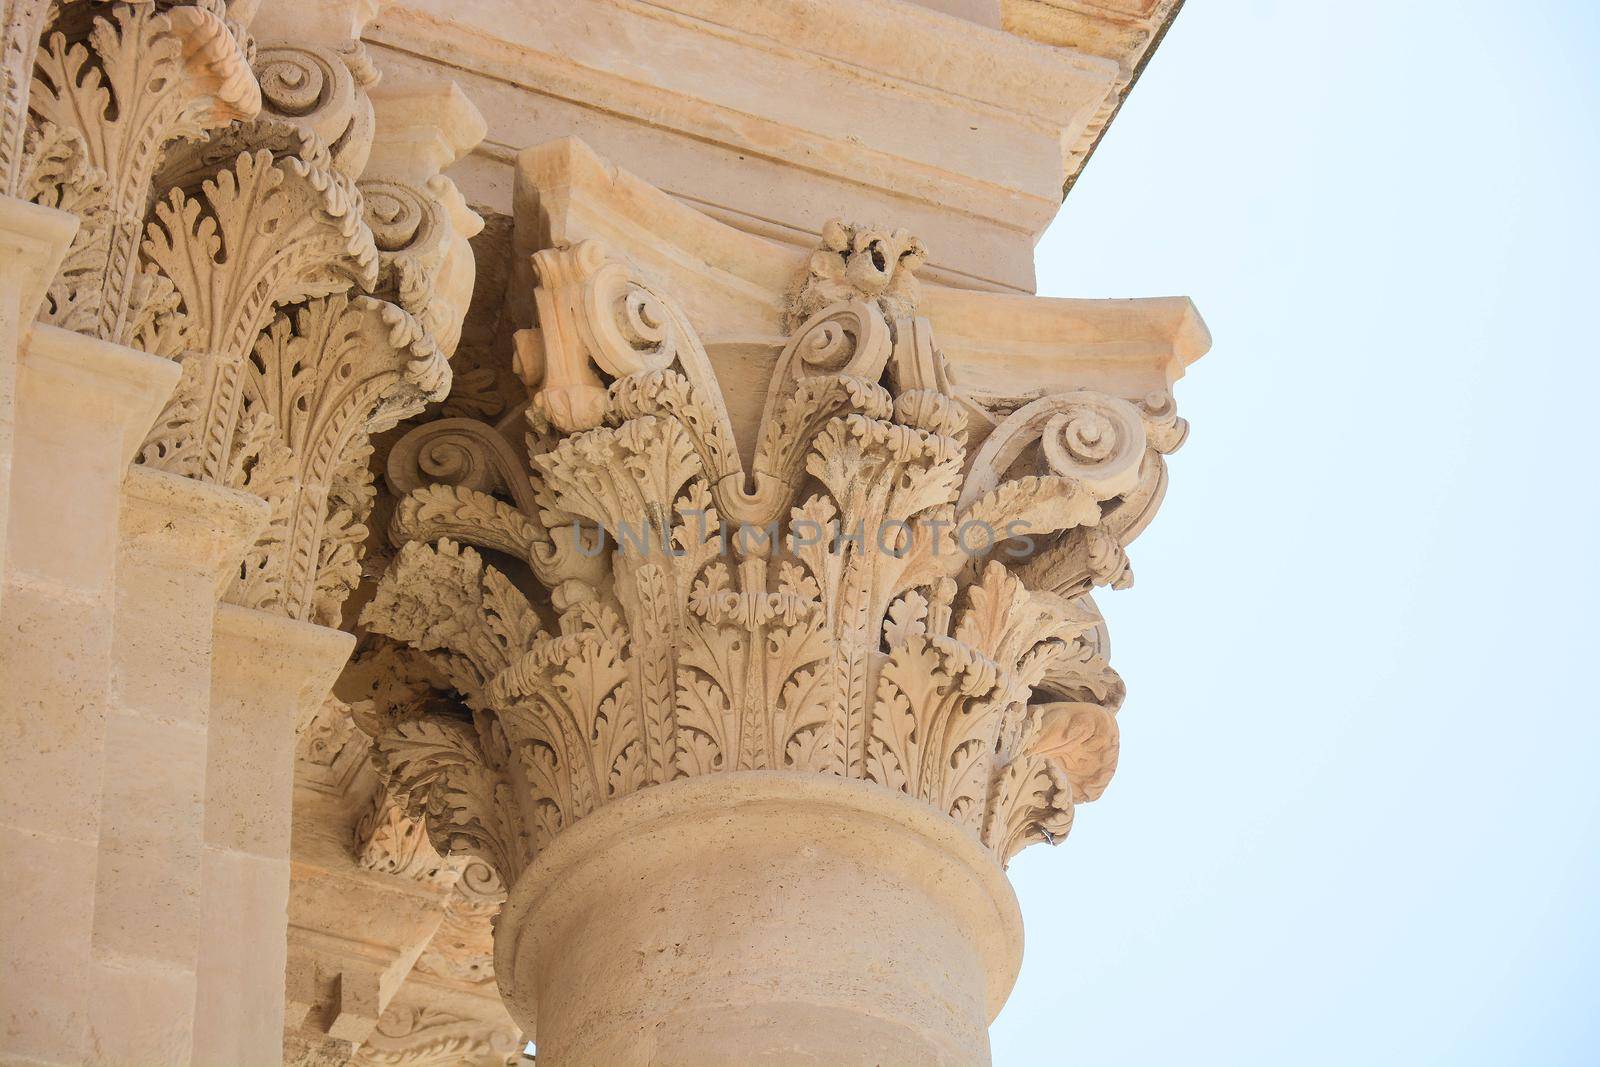 unique details of architectural treasures in Italy